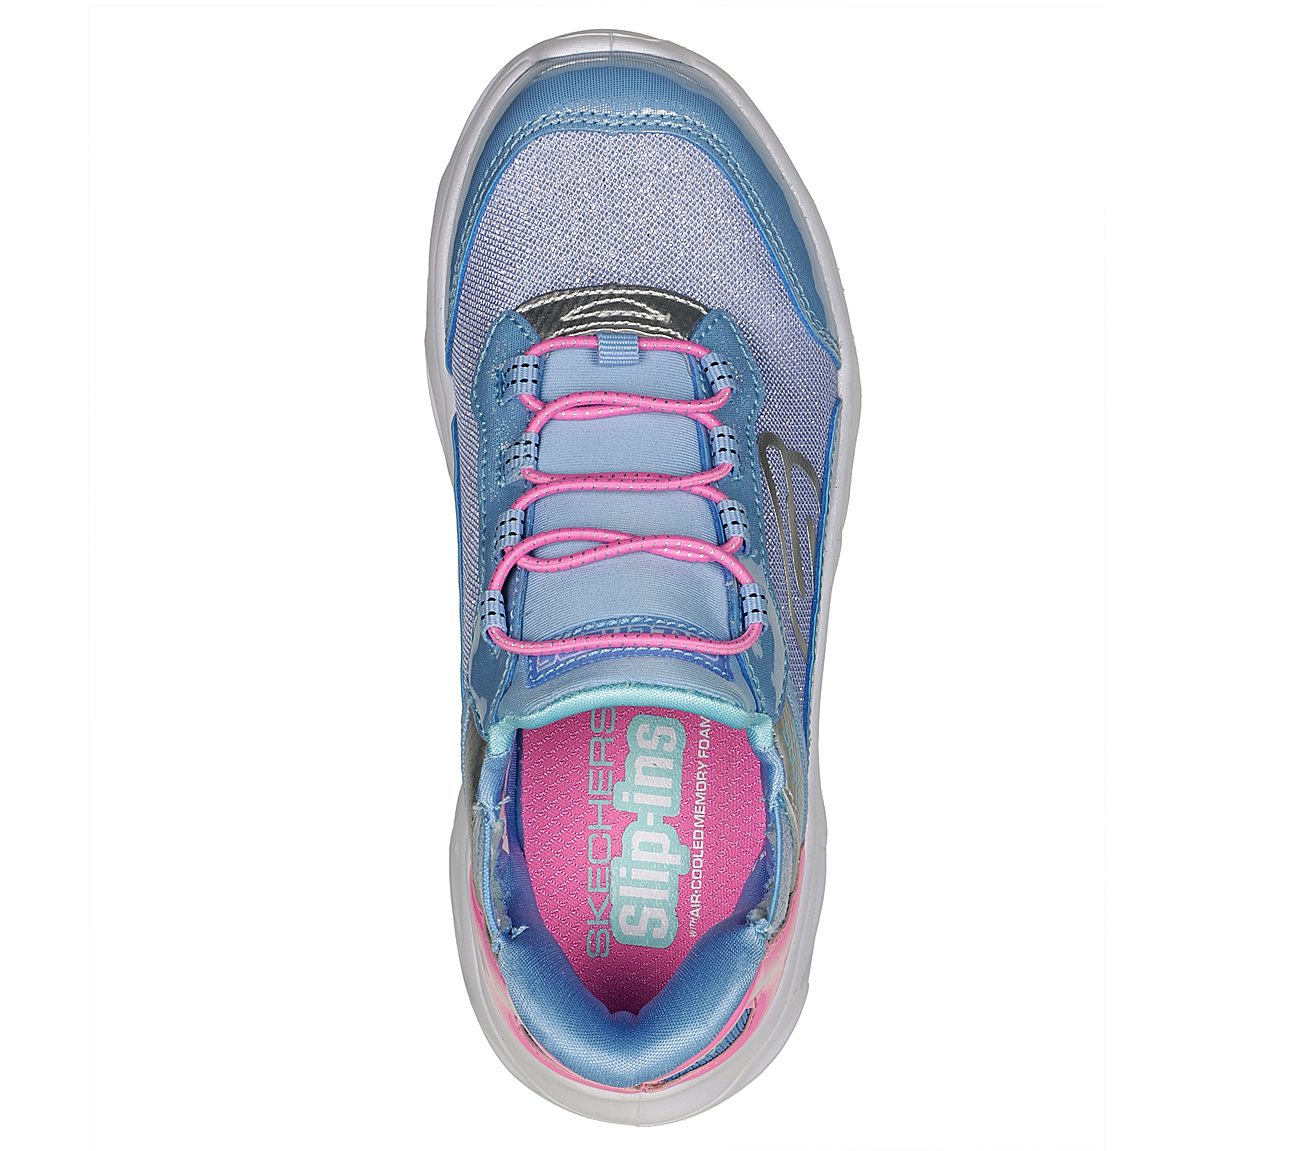 FLEX GLIDE, BLUE/PINK Footwear Top View